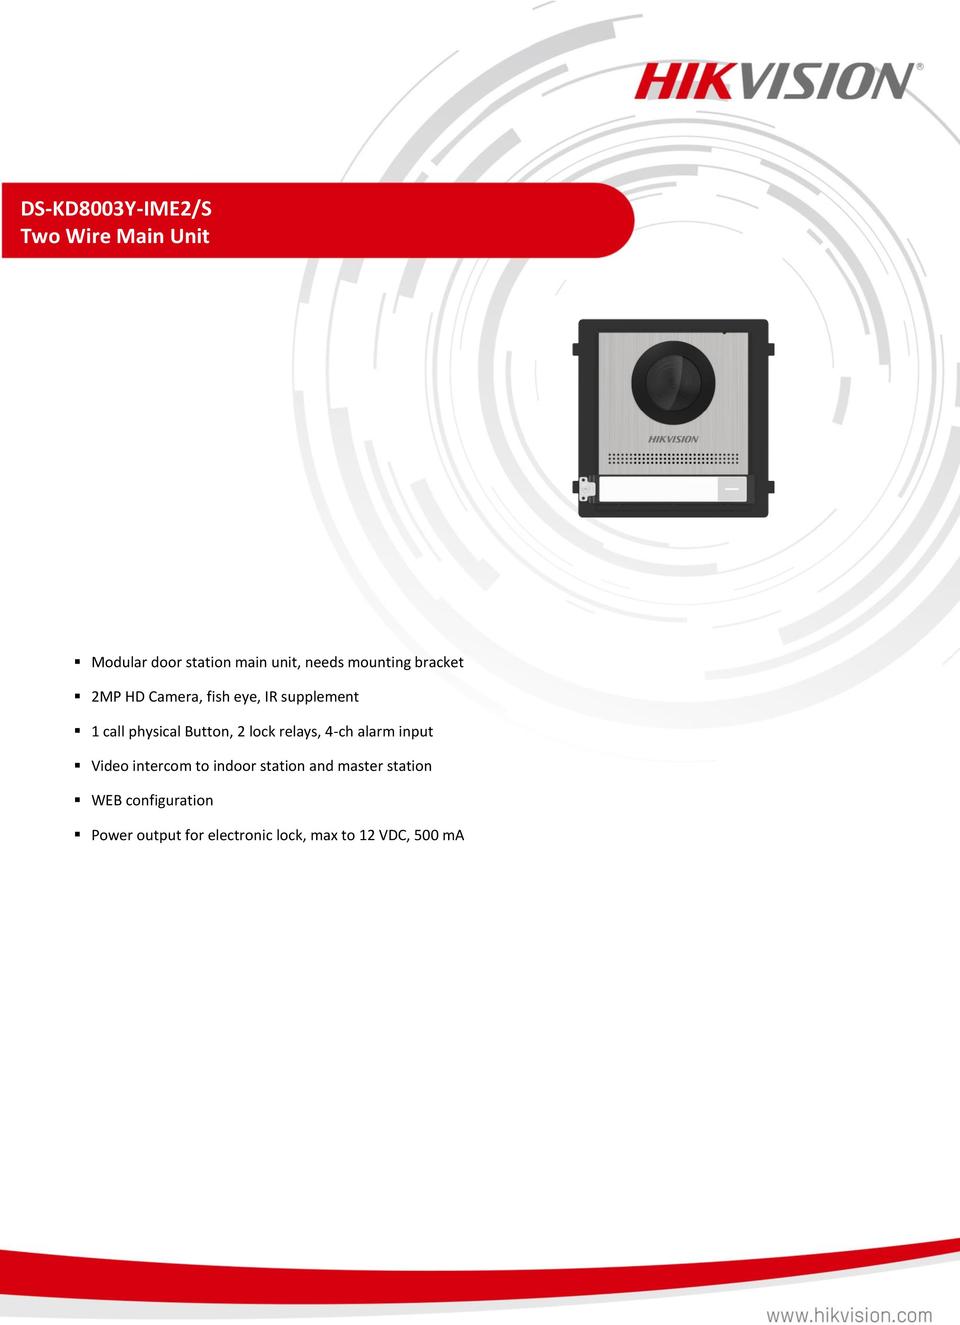 Hikvision DS-KD8003Y-IME2/S Intercom Door Station - Requires Surface or Flush Mount Bracket 0